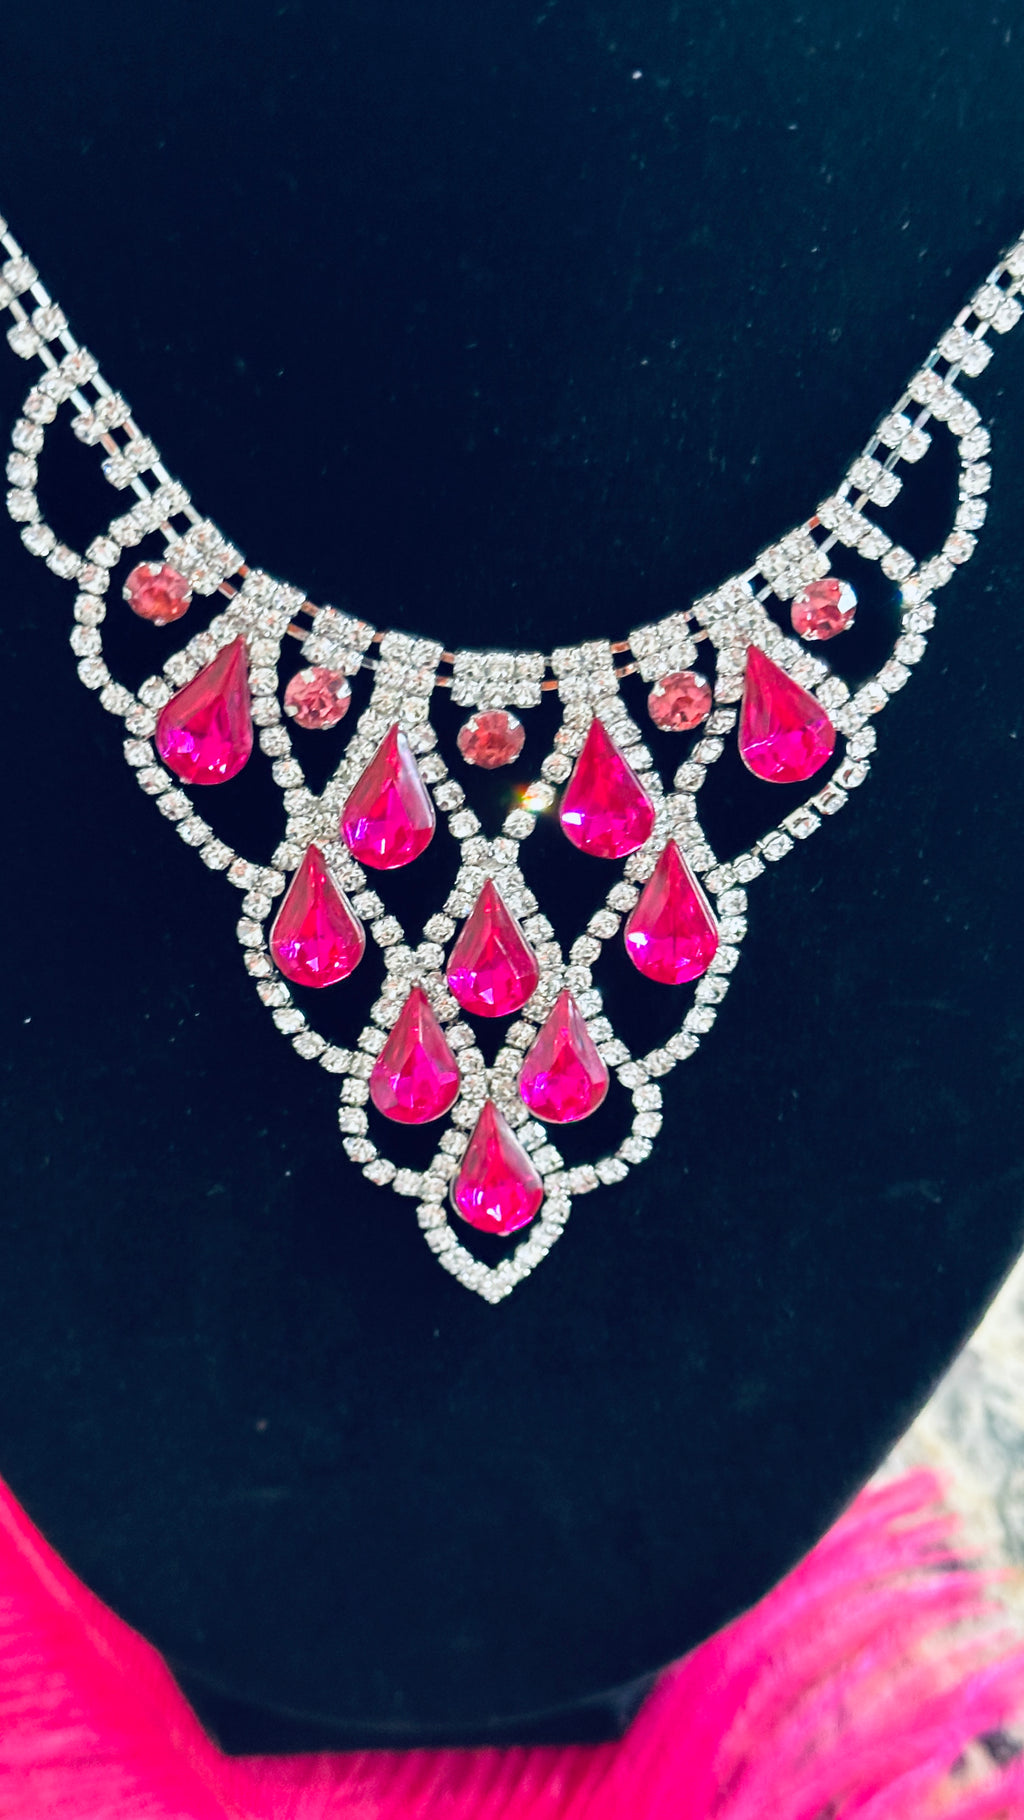 Hot Pink Rhinestone Bib Necklace